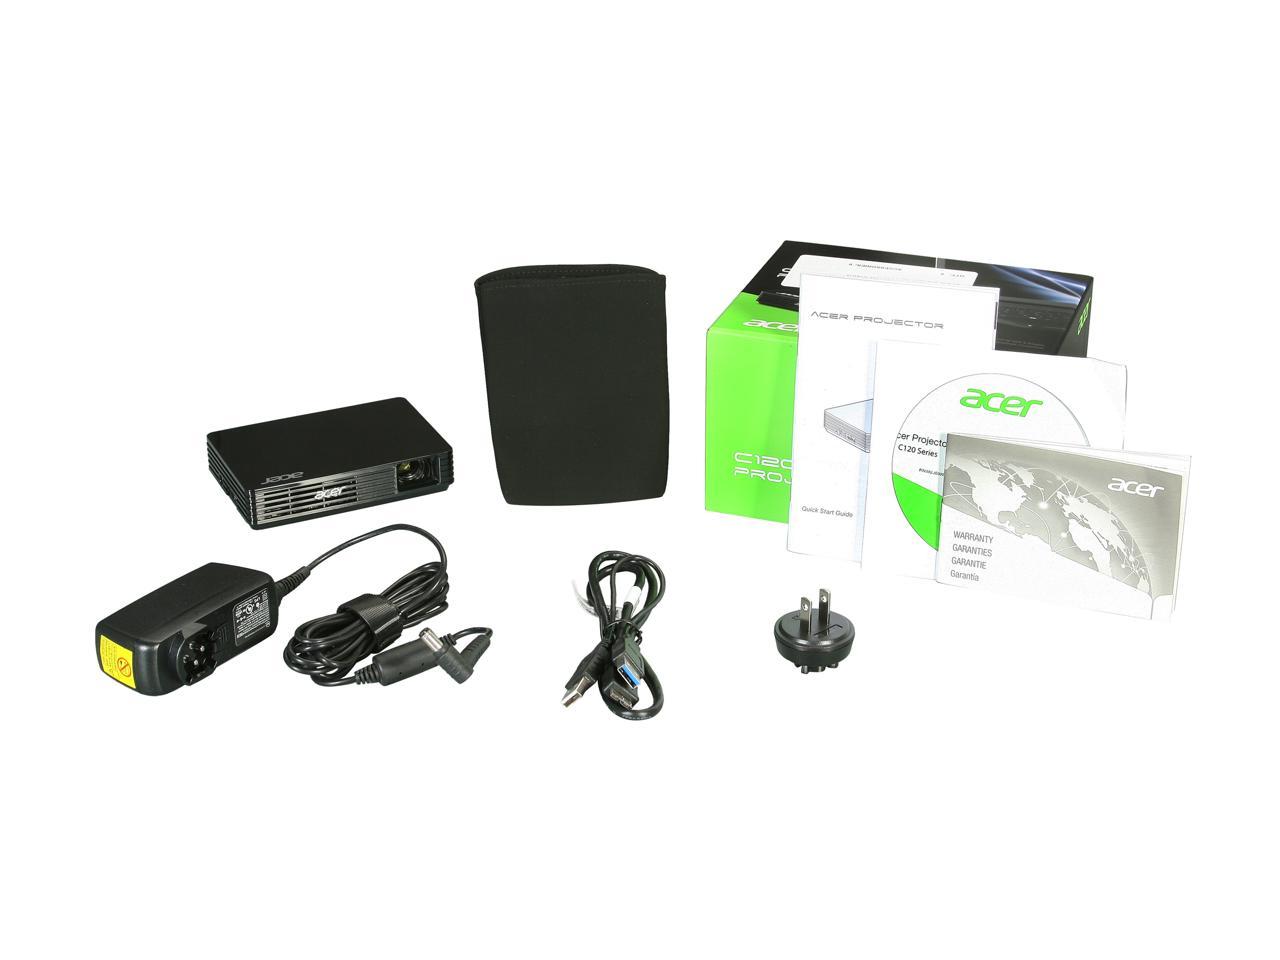 Acer C120 Black DLP Projector, 1280 x 800, 1000:1, 100 ANSI Lumens, USB 3.0 Input